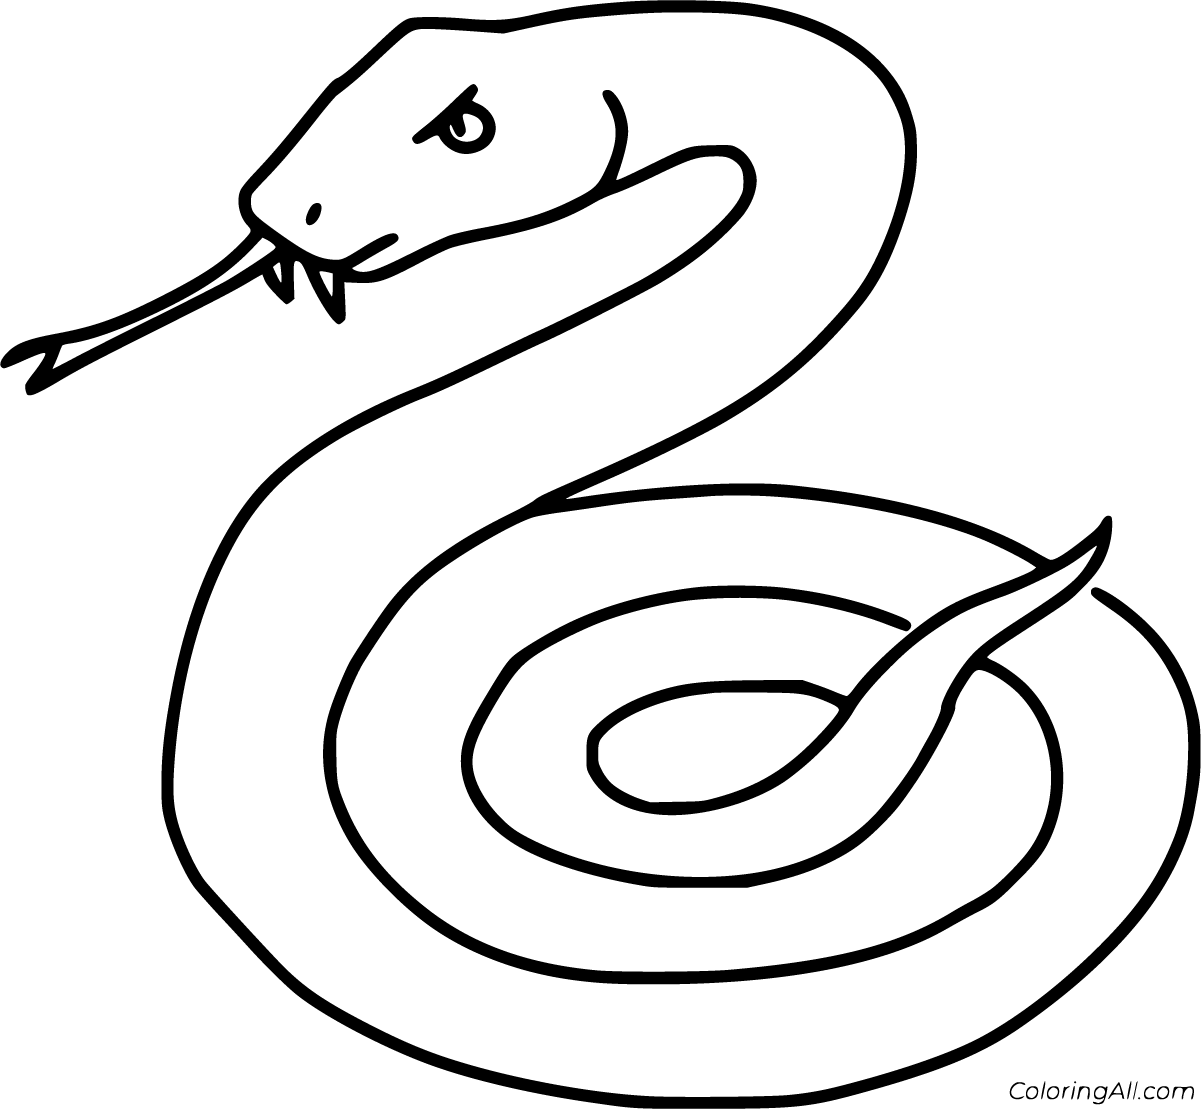 viper snake realistic drawing